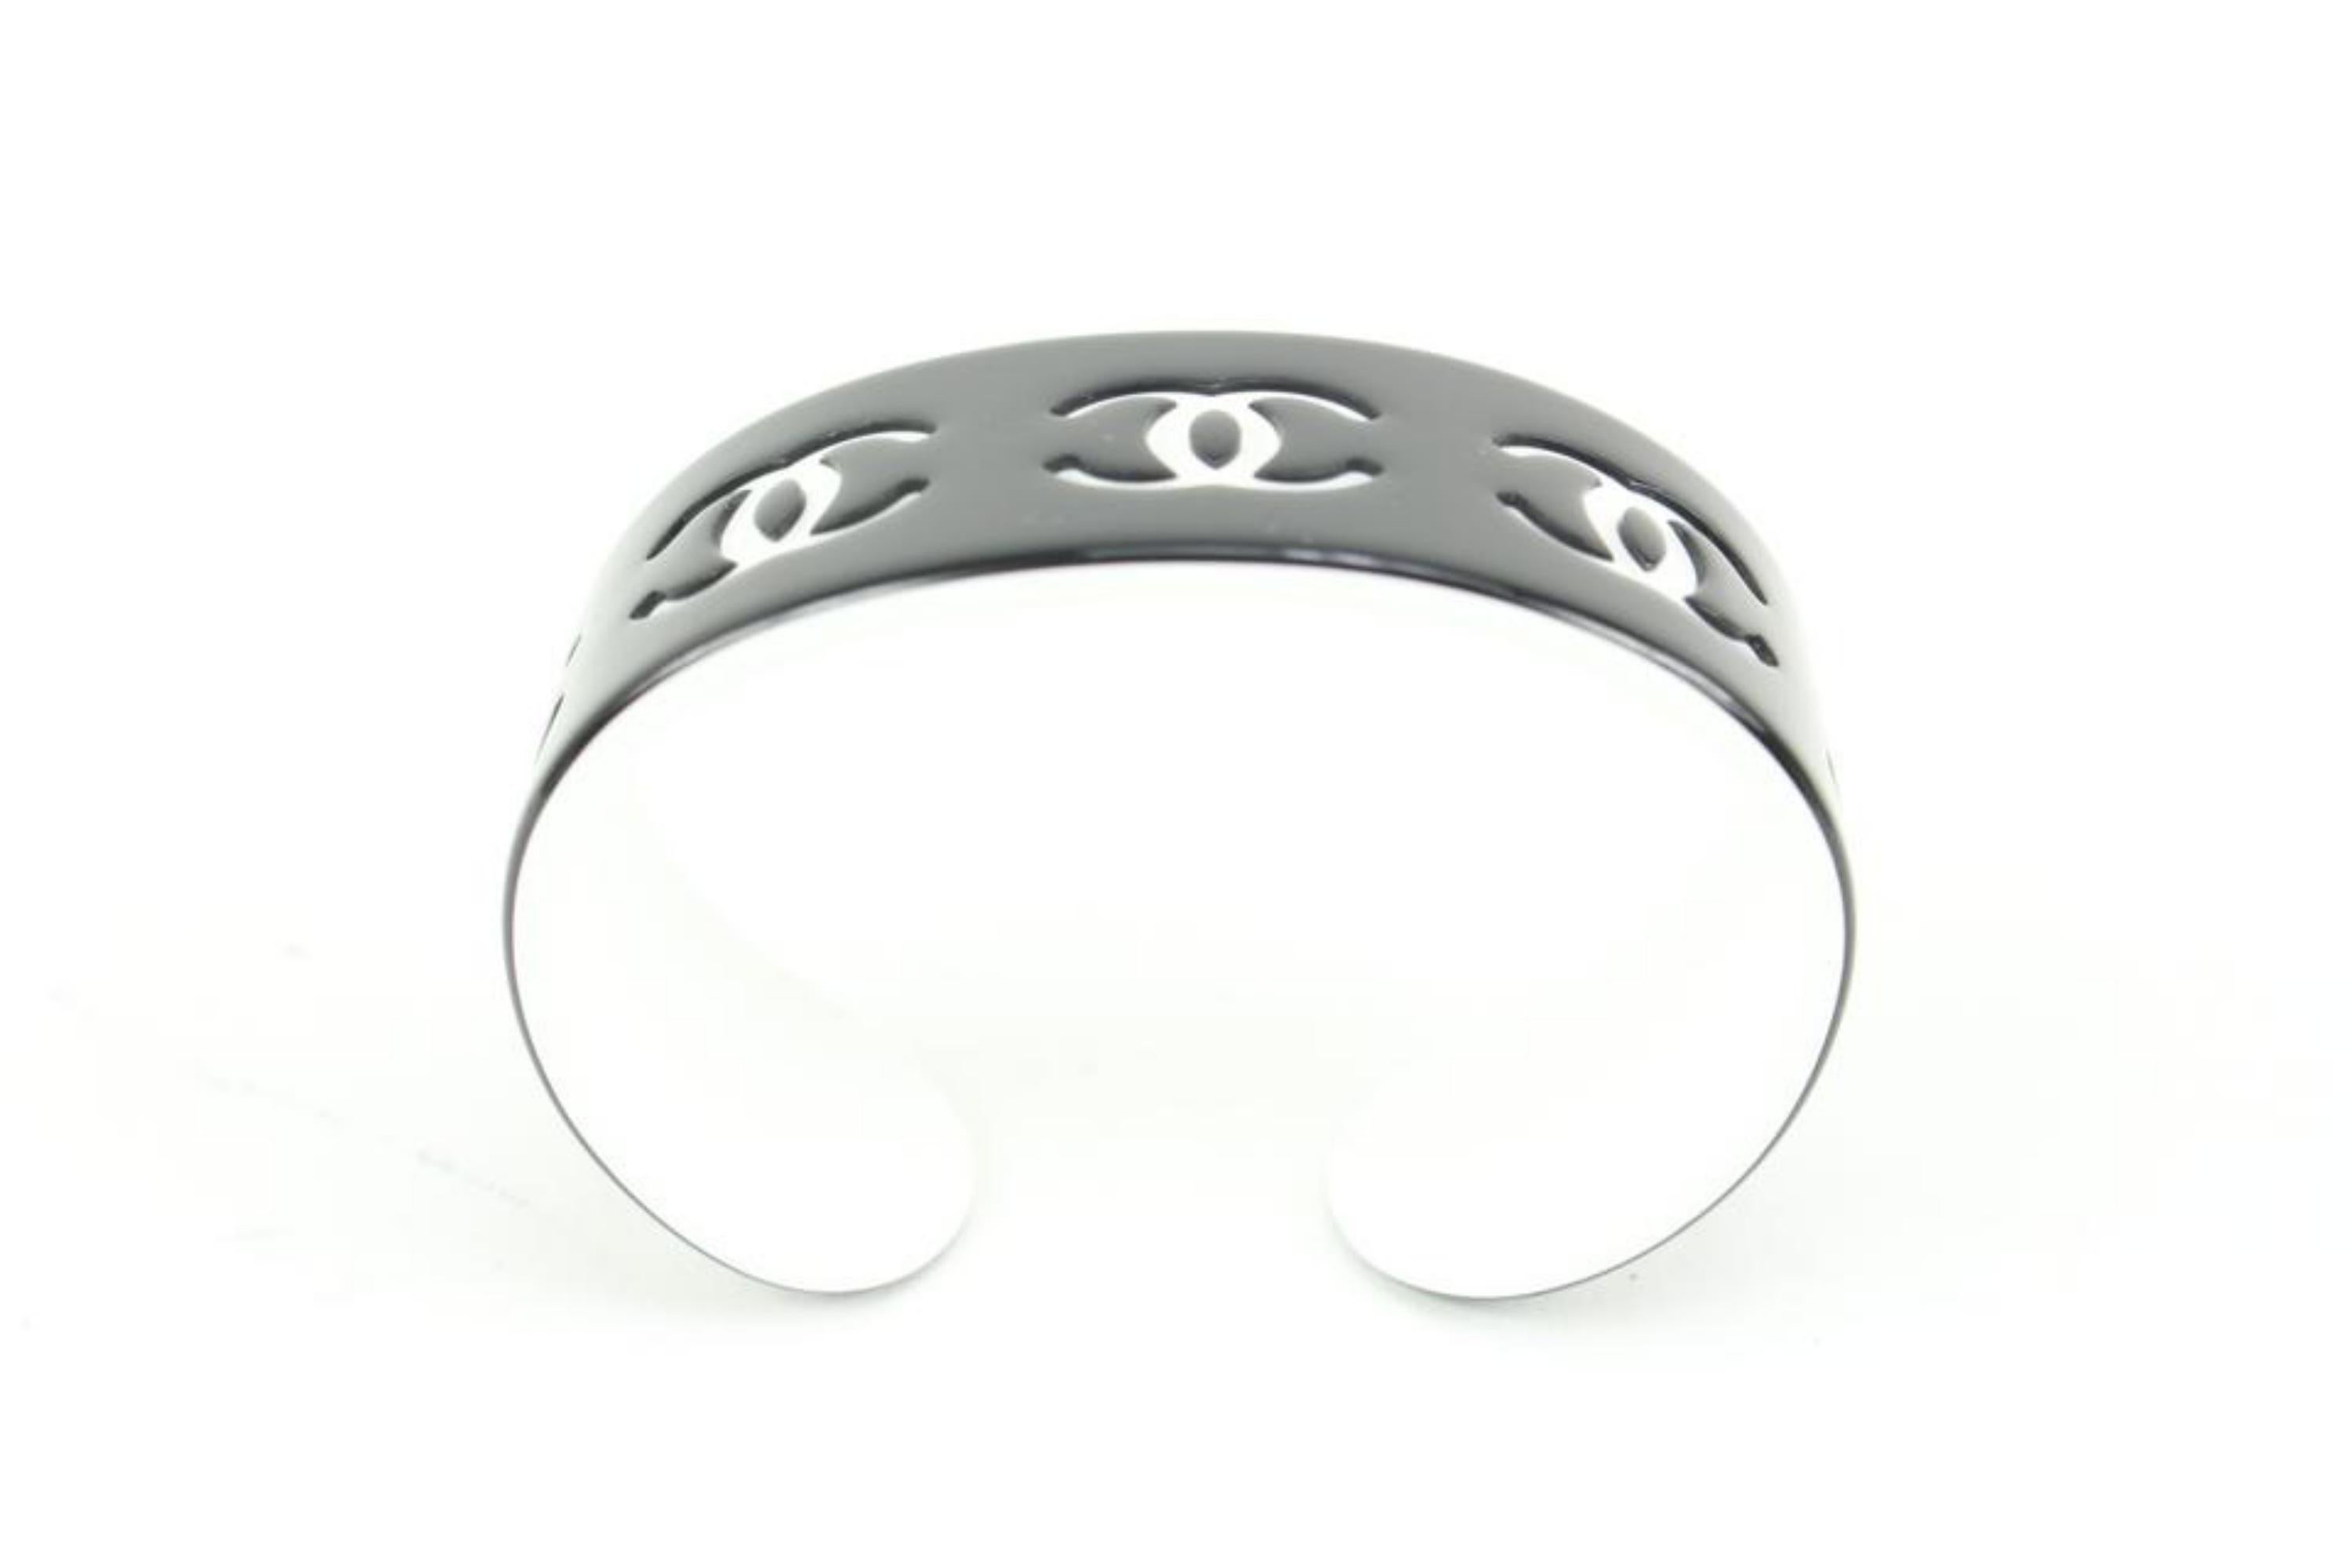 Gray Chanel 02P Black x White CC Logo Acrylic Cuff Bracelet Bangle 70cz418s